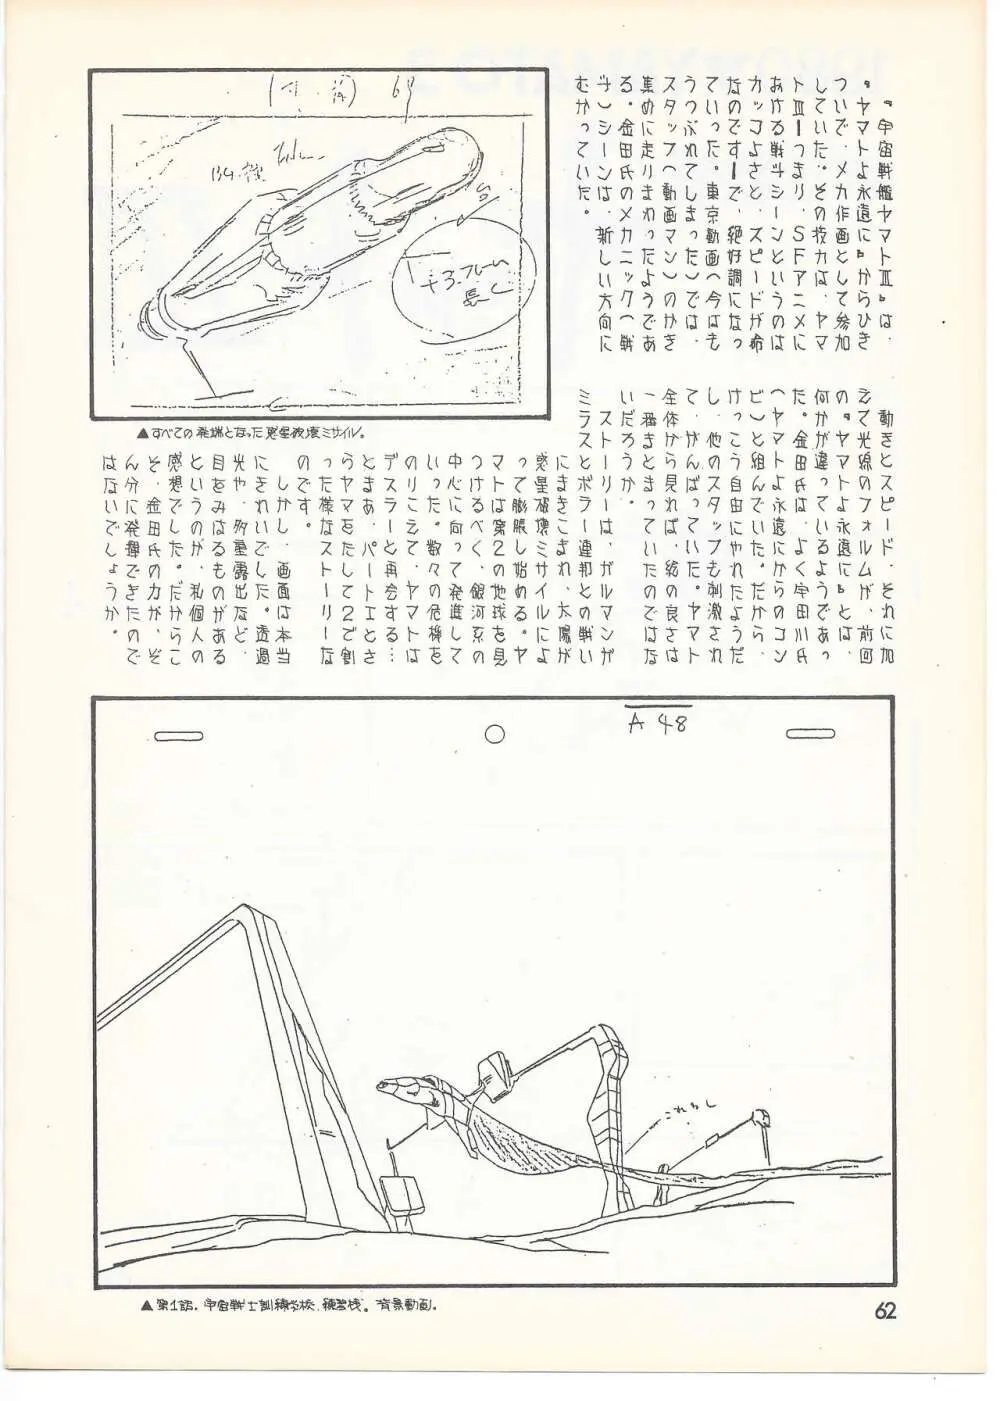 THE ANIMATOR 1 金田伊功特集号 - page59